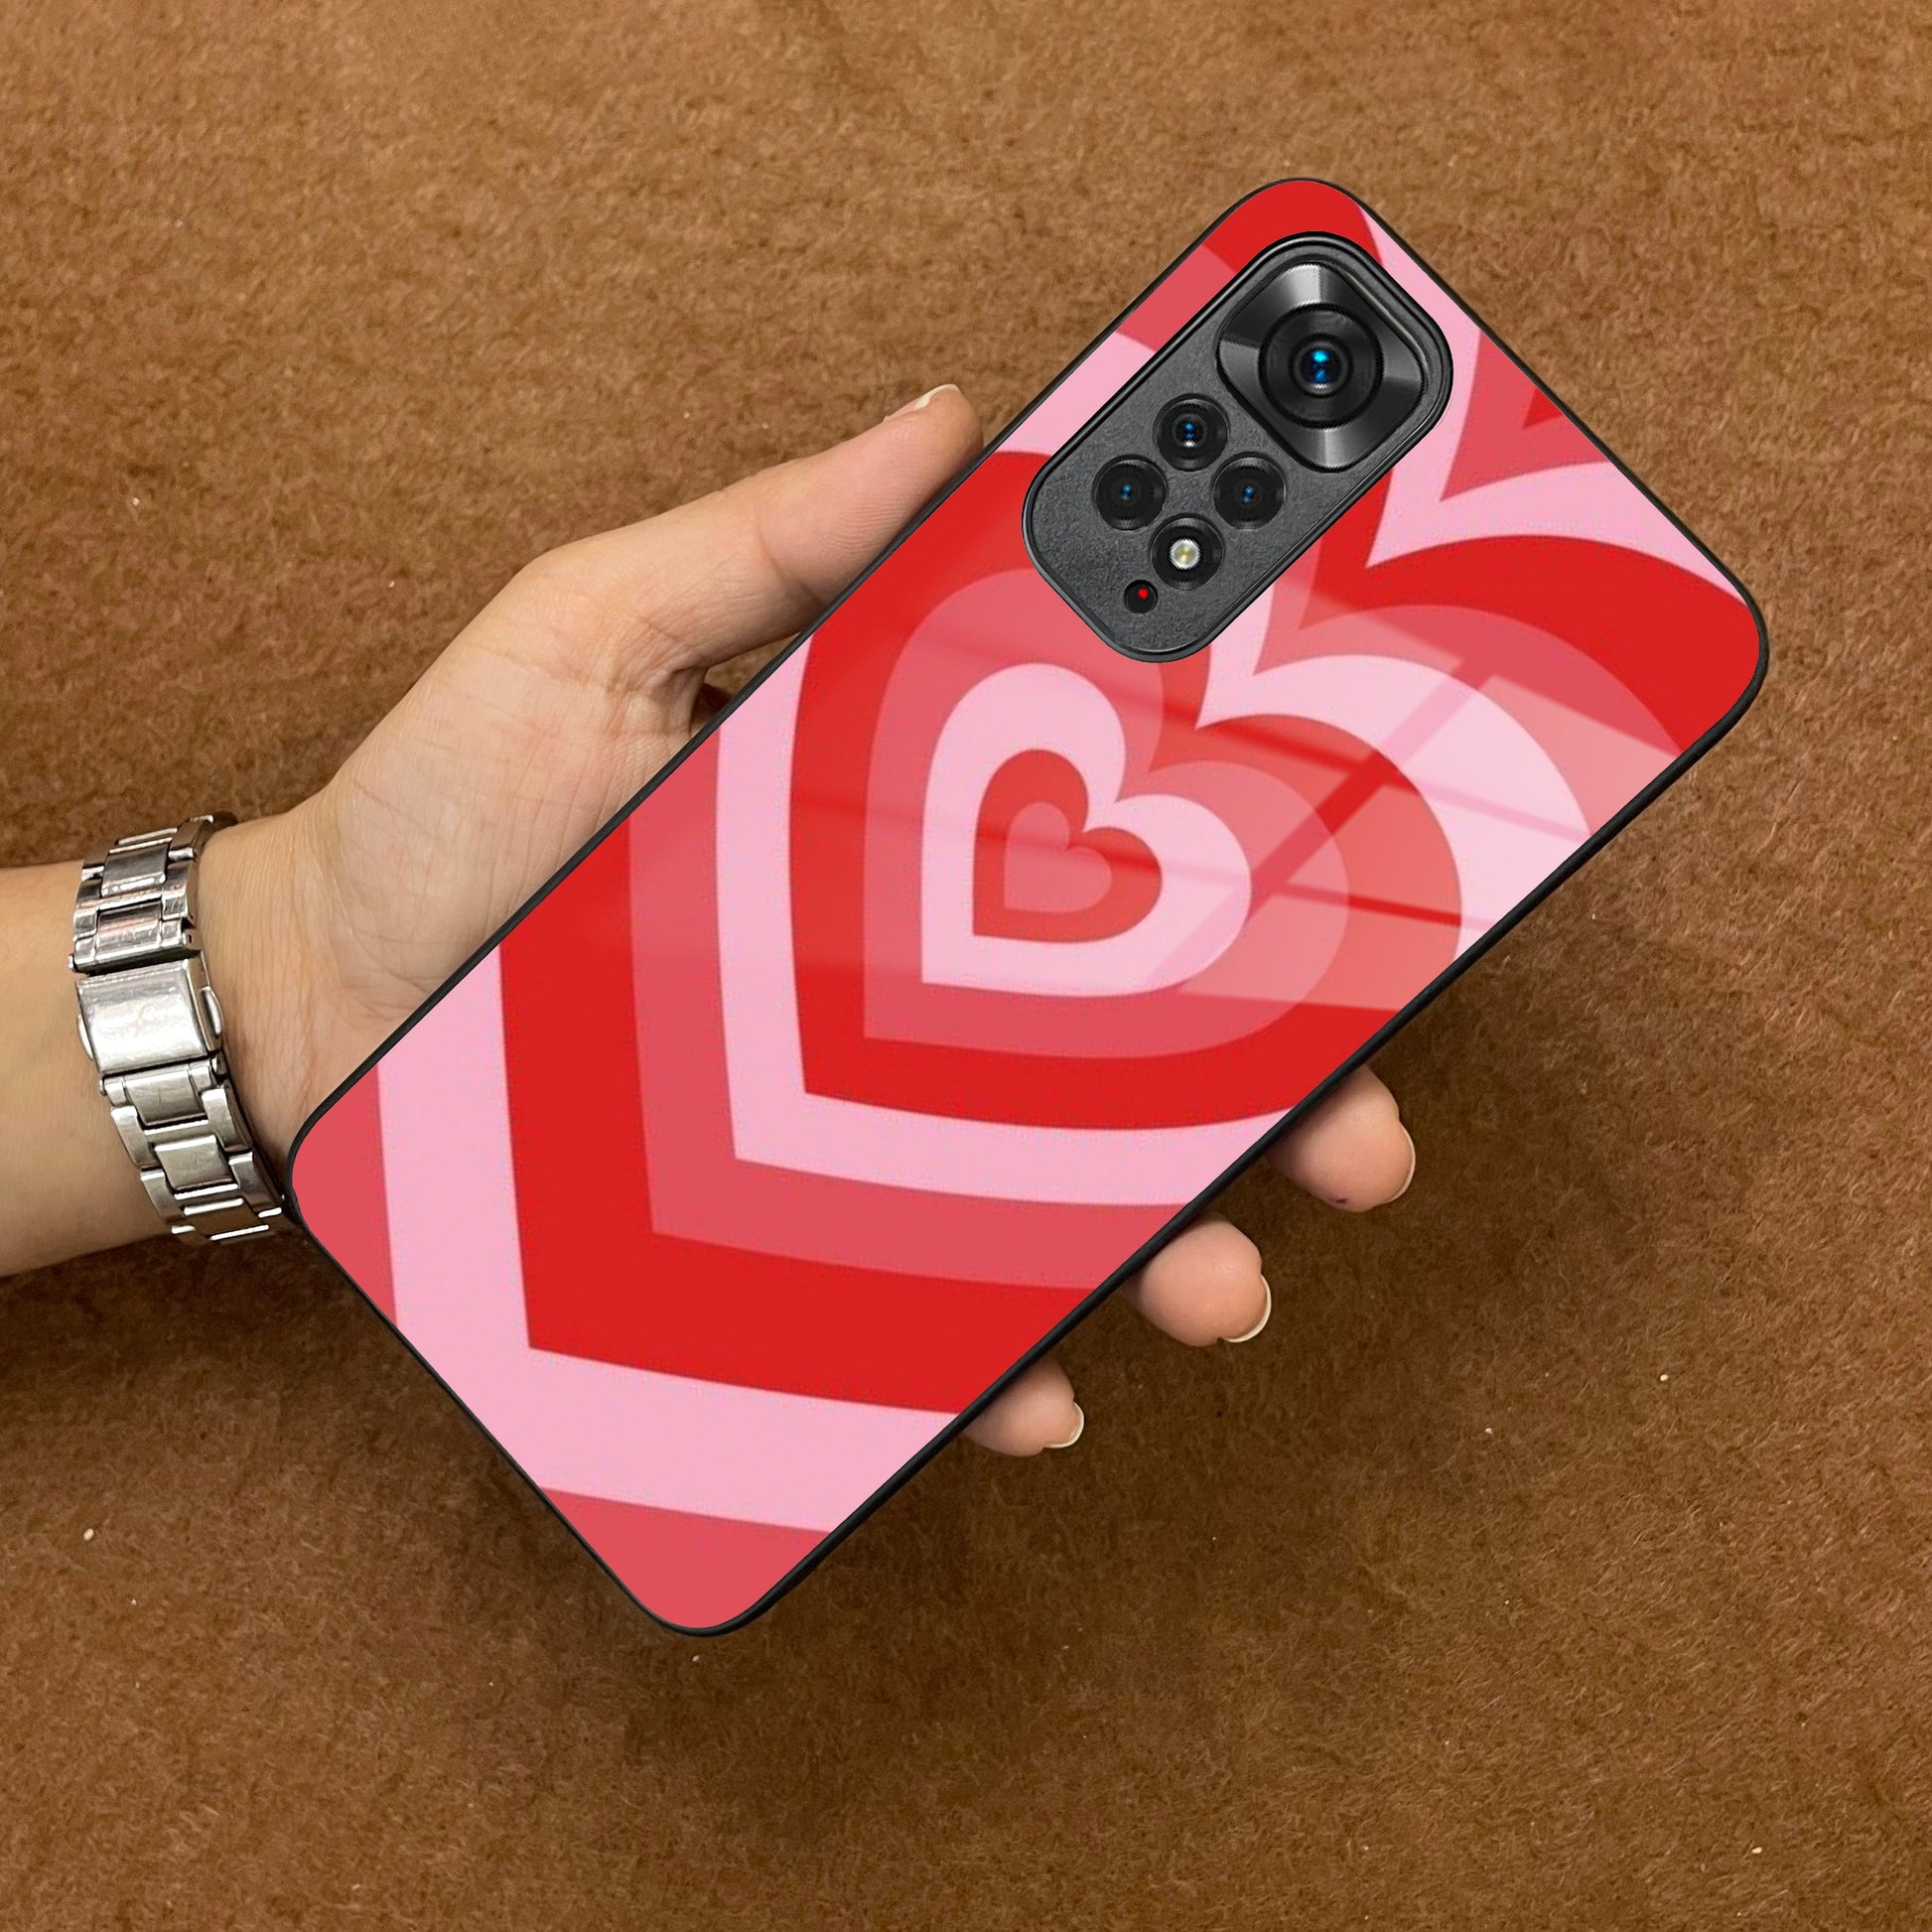 Latte Love Patter Glass Case Cover - Red Redmi/Xiaomi ShopOnCliQ